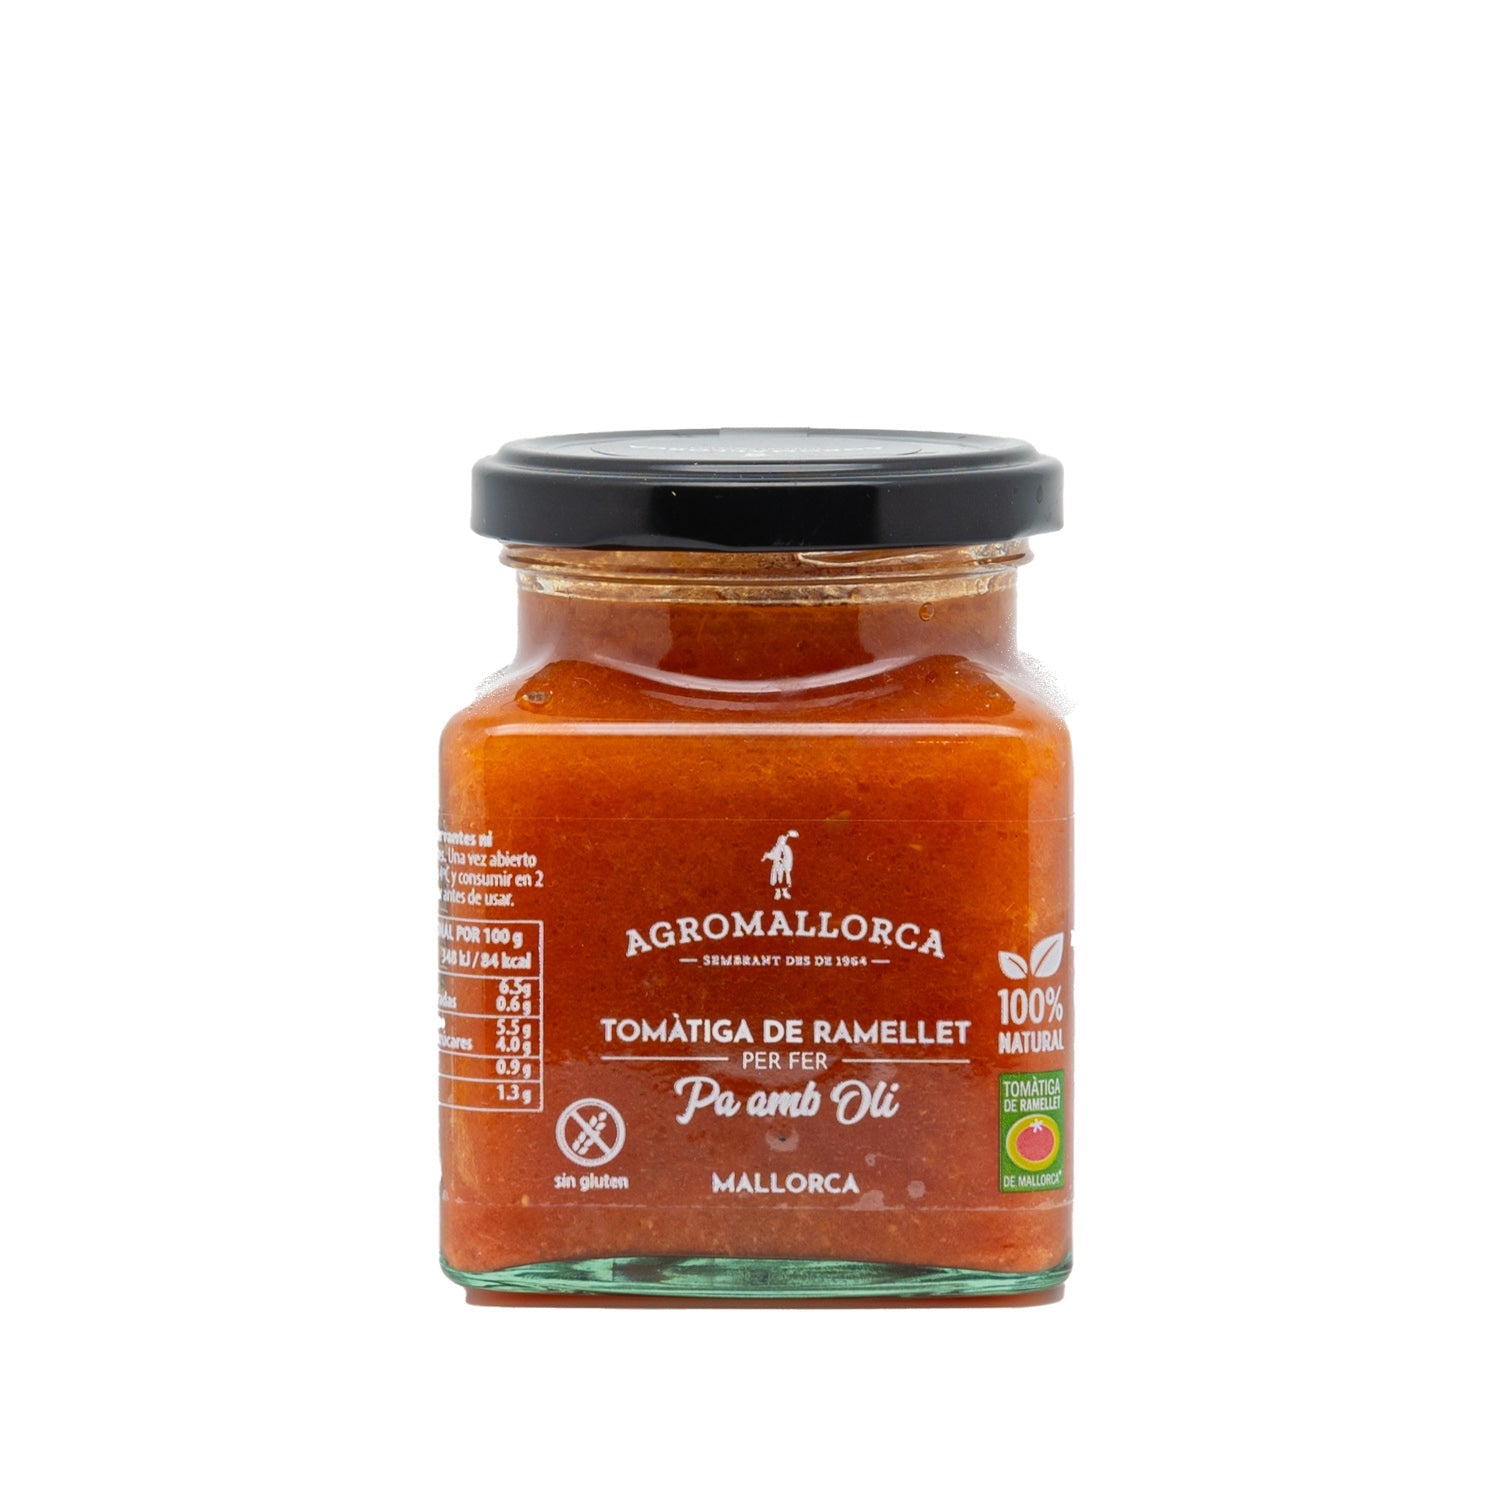 Pa amb Oli - Tomate Ramillete (270g) - Gourmet Markt - Agromallorca